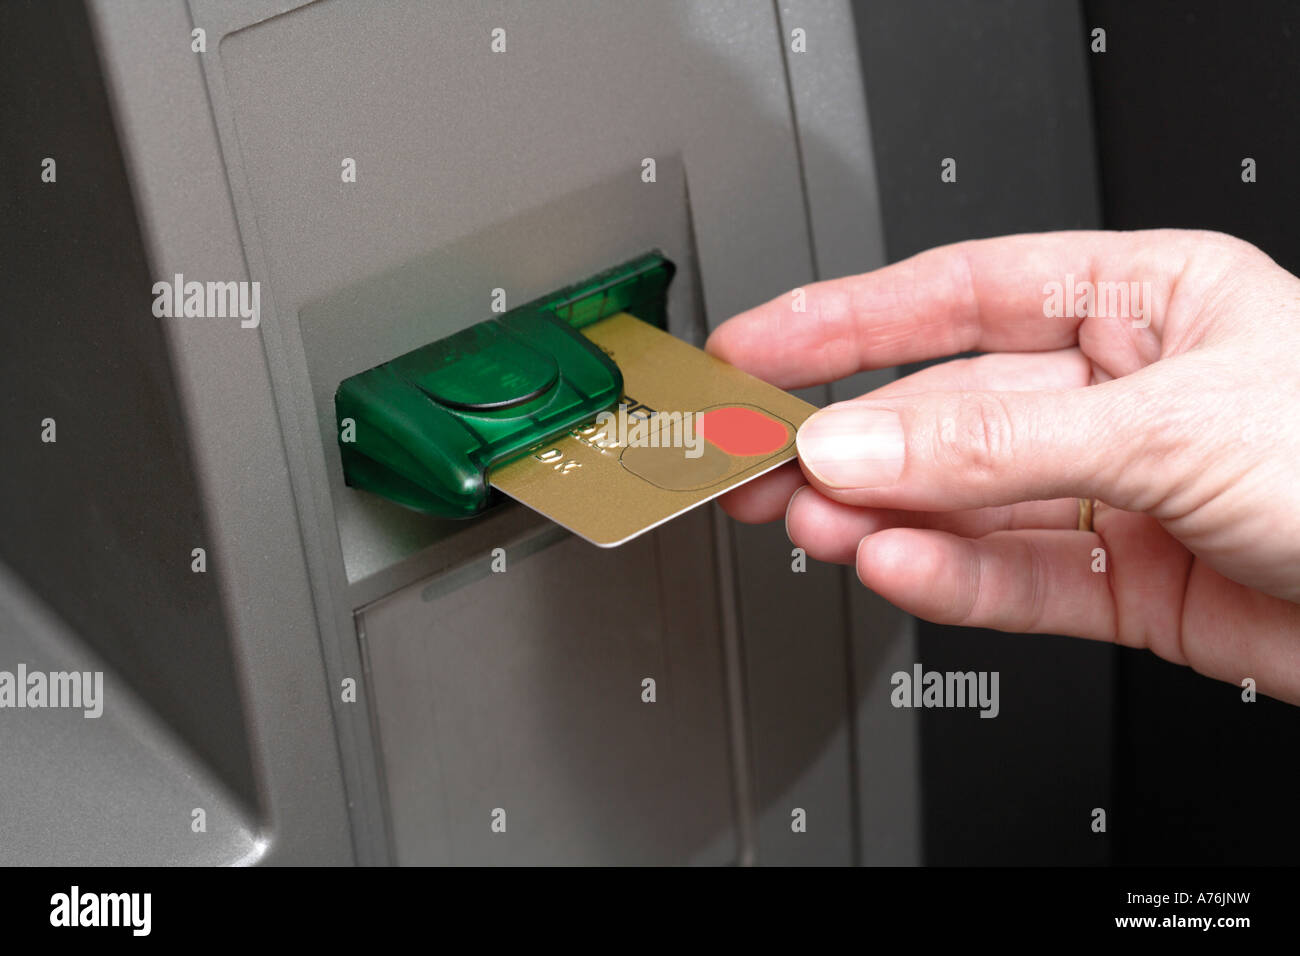 Hand pushing credit card into cash terminal, close-up Stock Photo